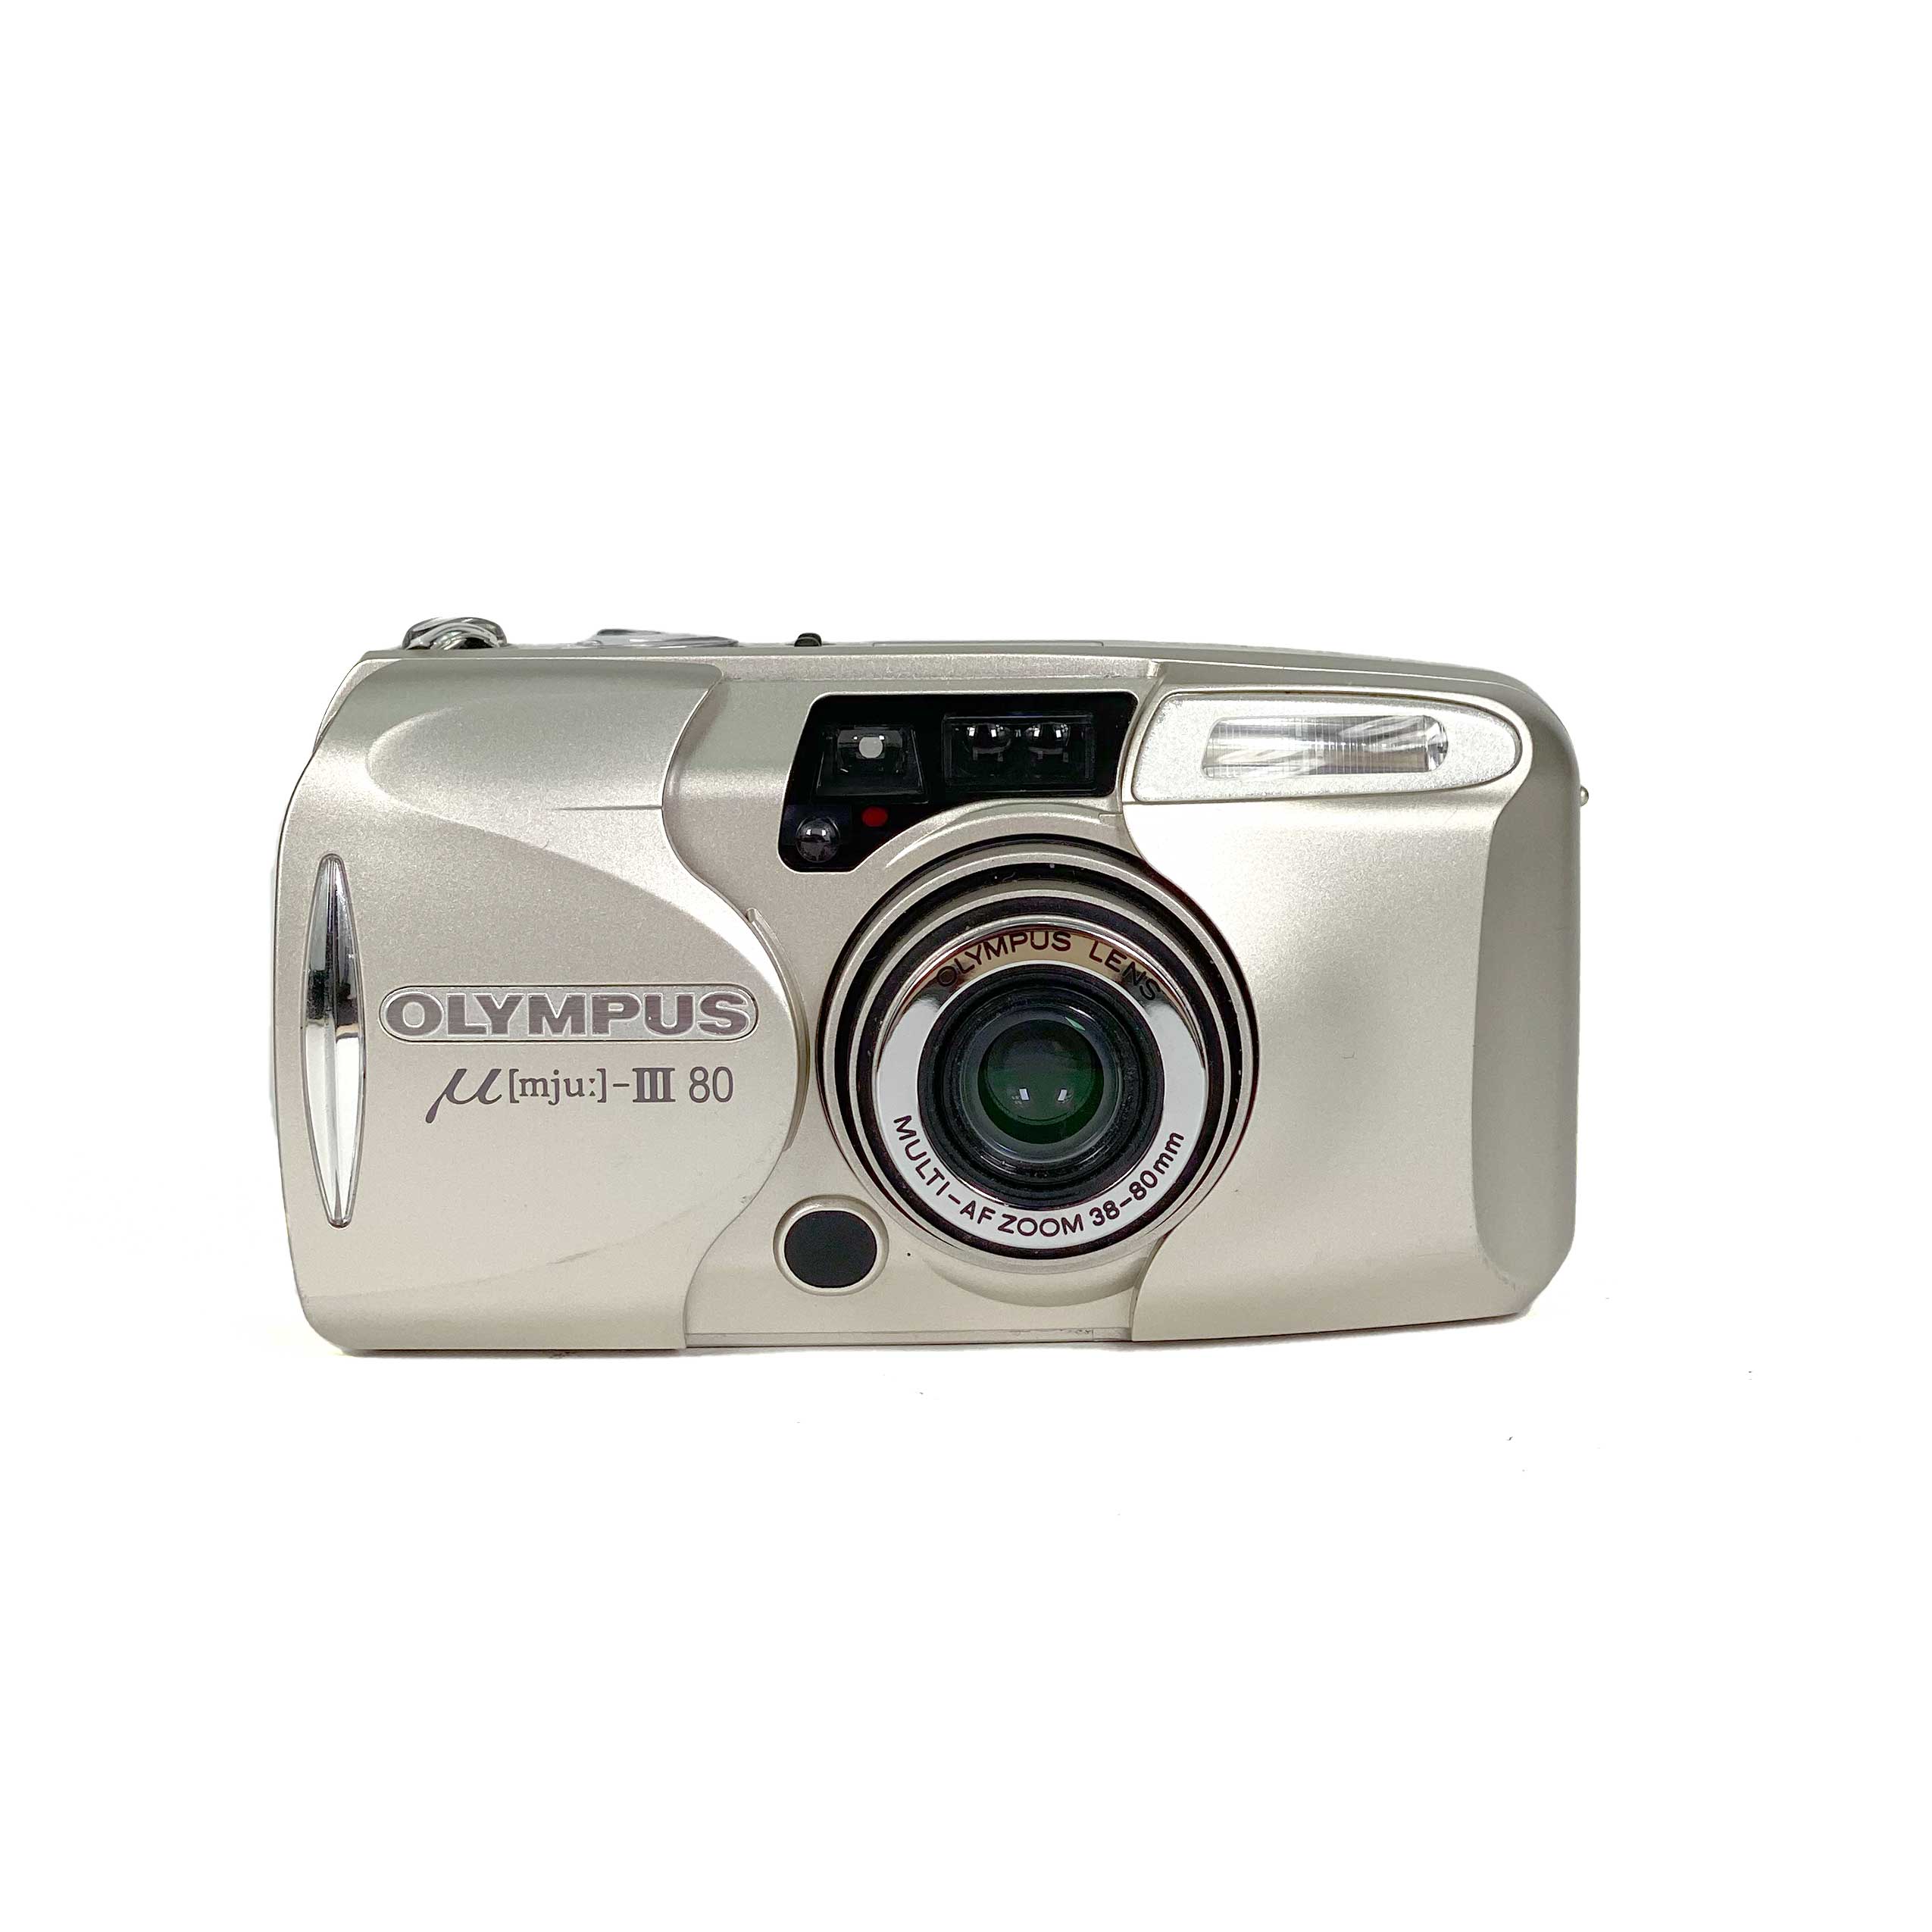 Overtreding echo Wrak Olympus Mju III 80 – Retro Camera Shop